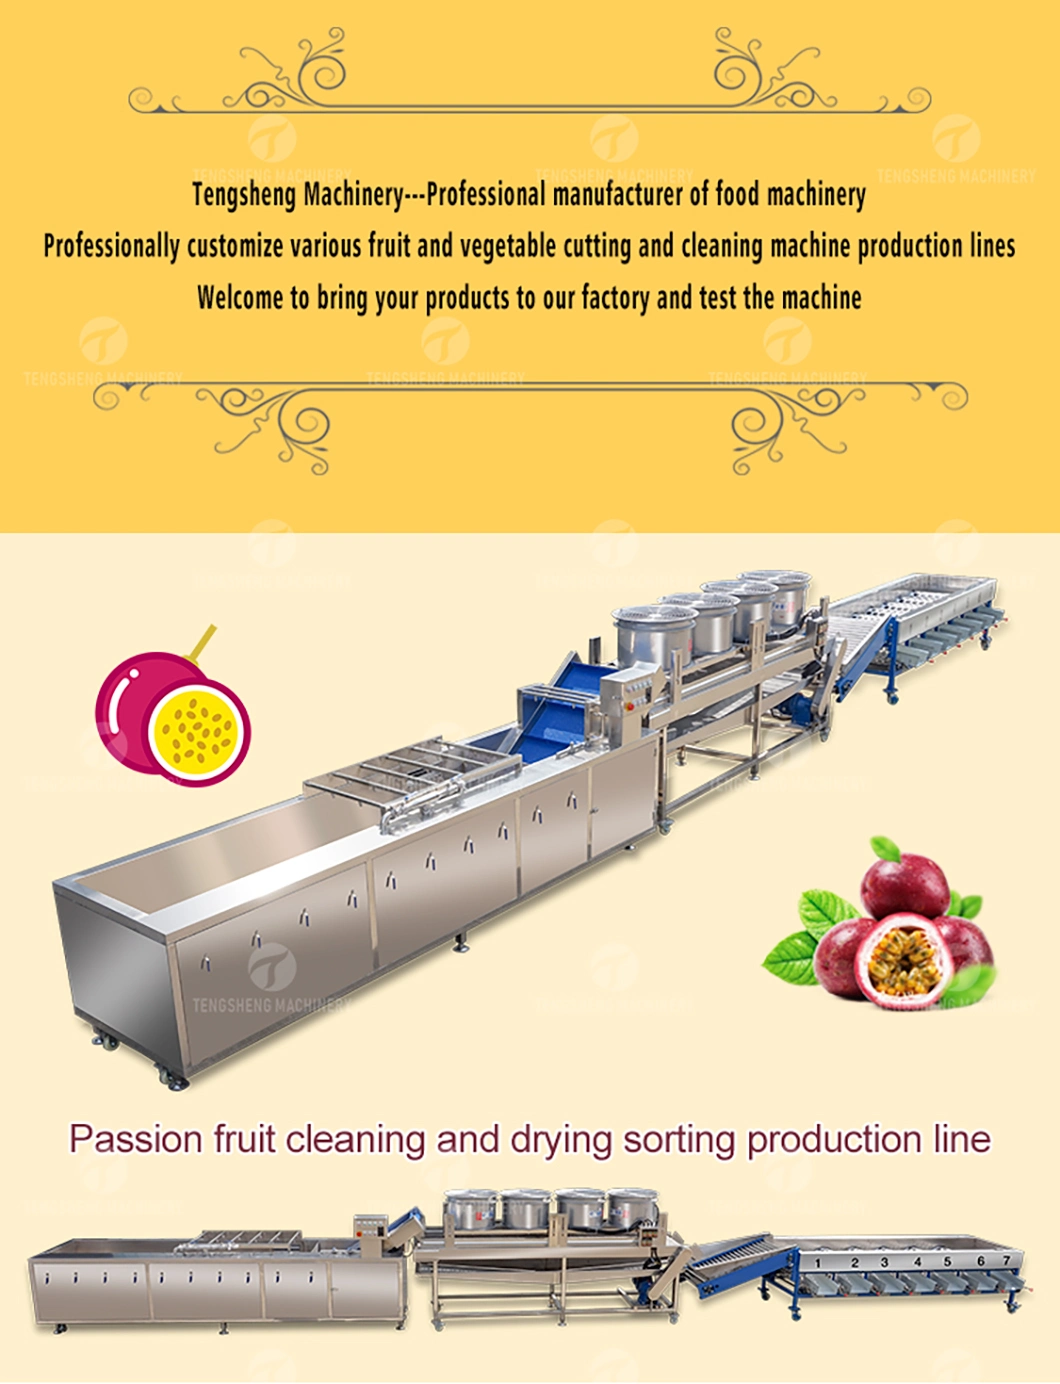 Large Commercial Fruit Sorter Lemon Passion Fruit Apple Orange Grading Machine (TS-FS670)